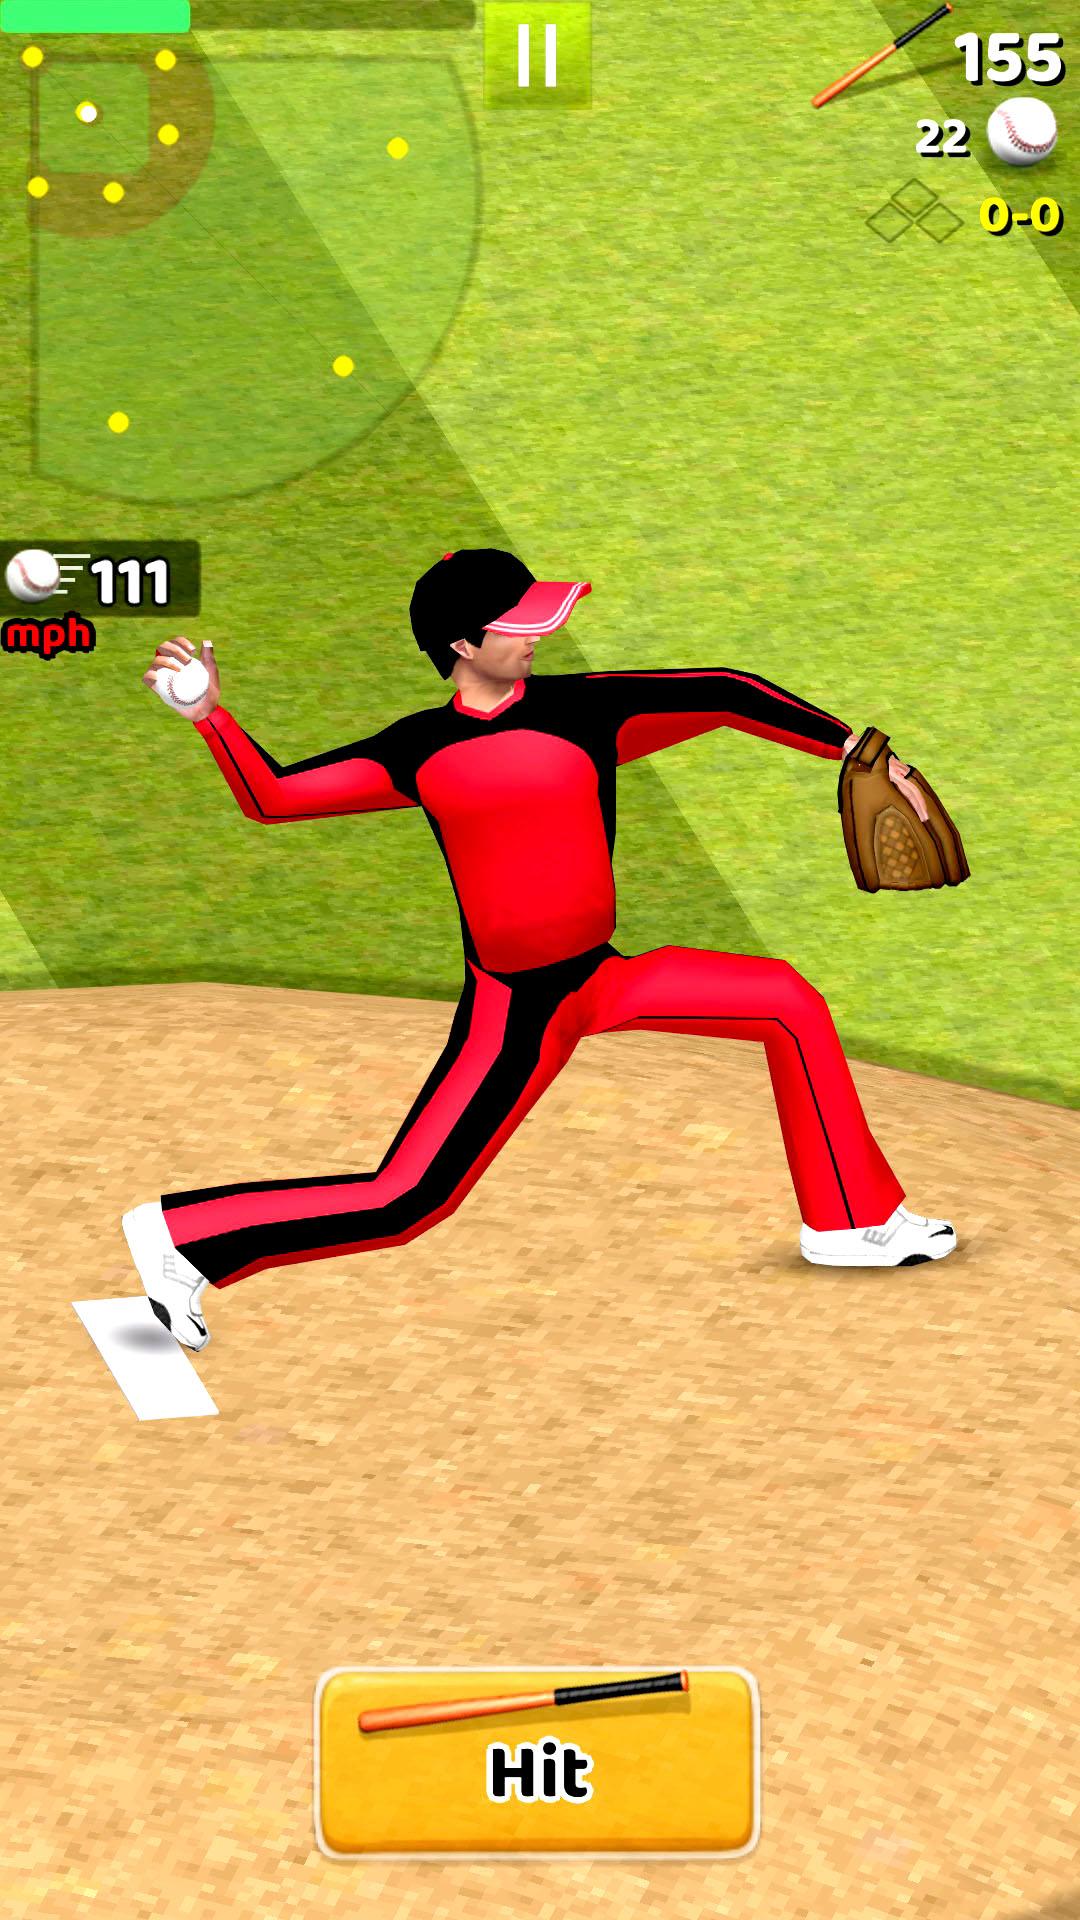 Smashing Baseball a baseball game like none other 1.0.6 Screenshot 2